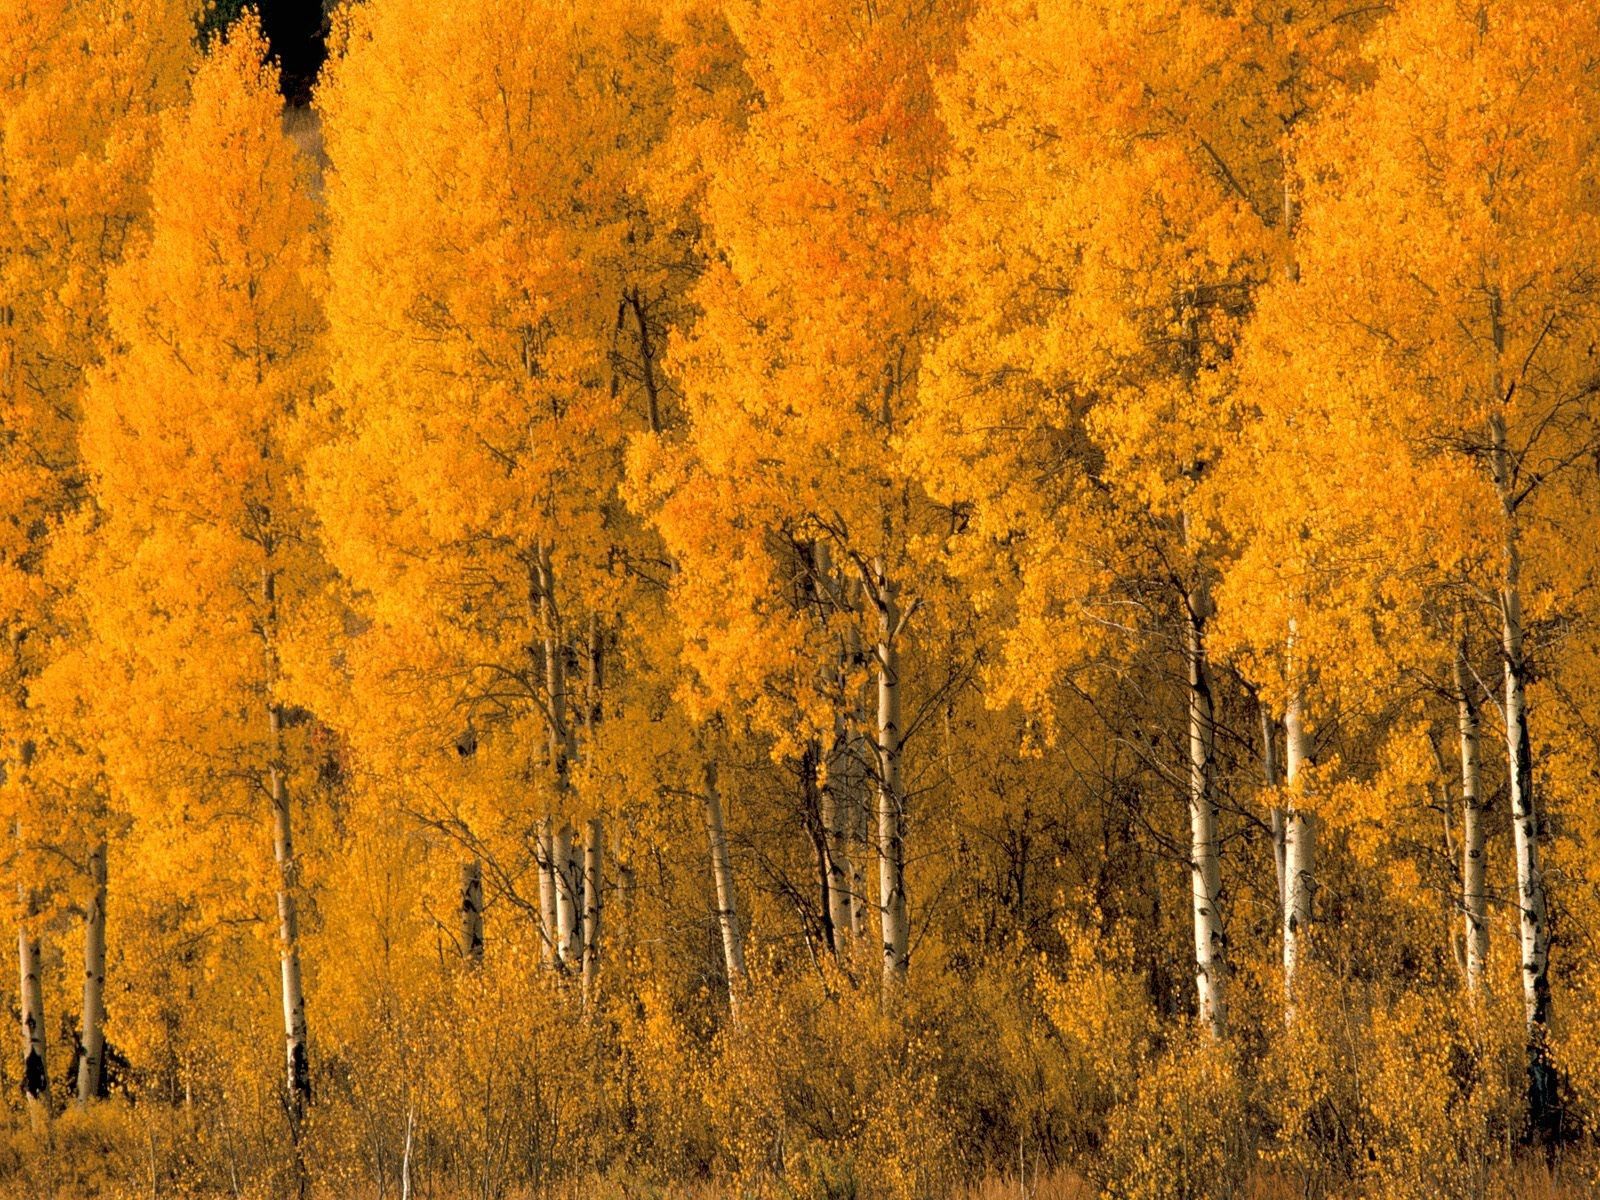 Phone Wallpaper (No watermarks) nature, autumn, trees, yellow